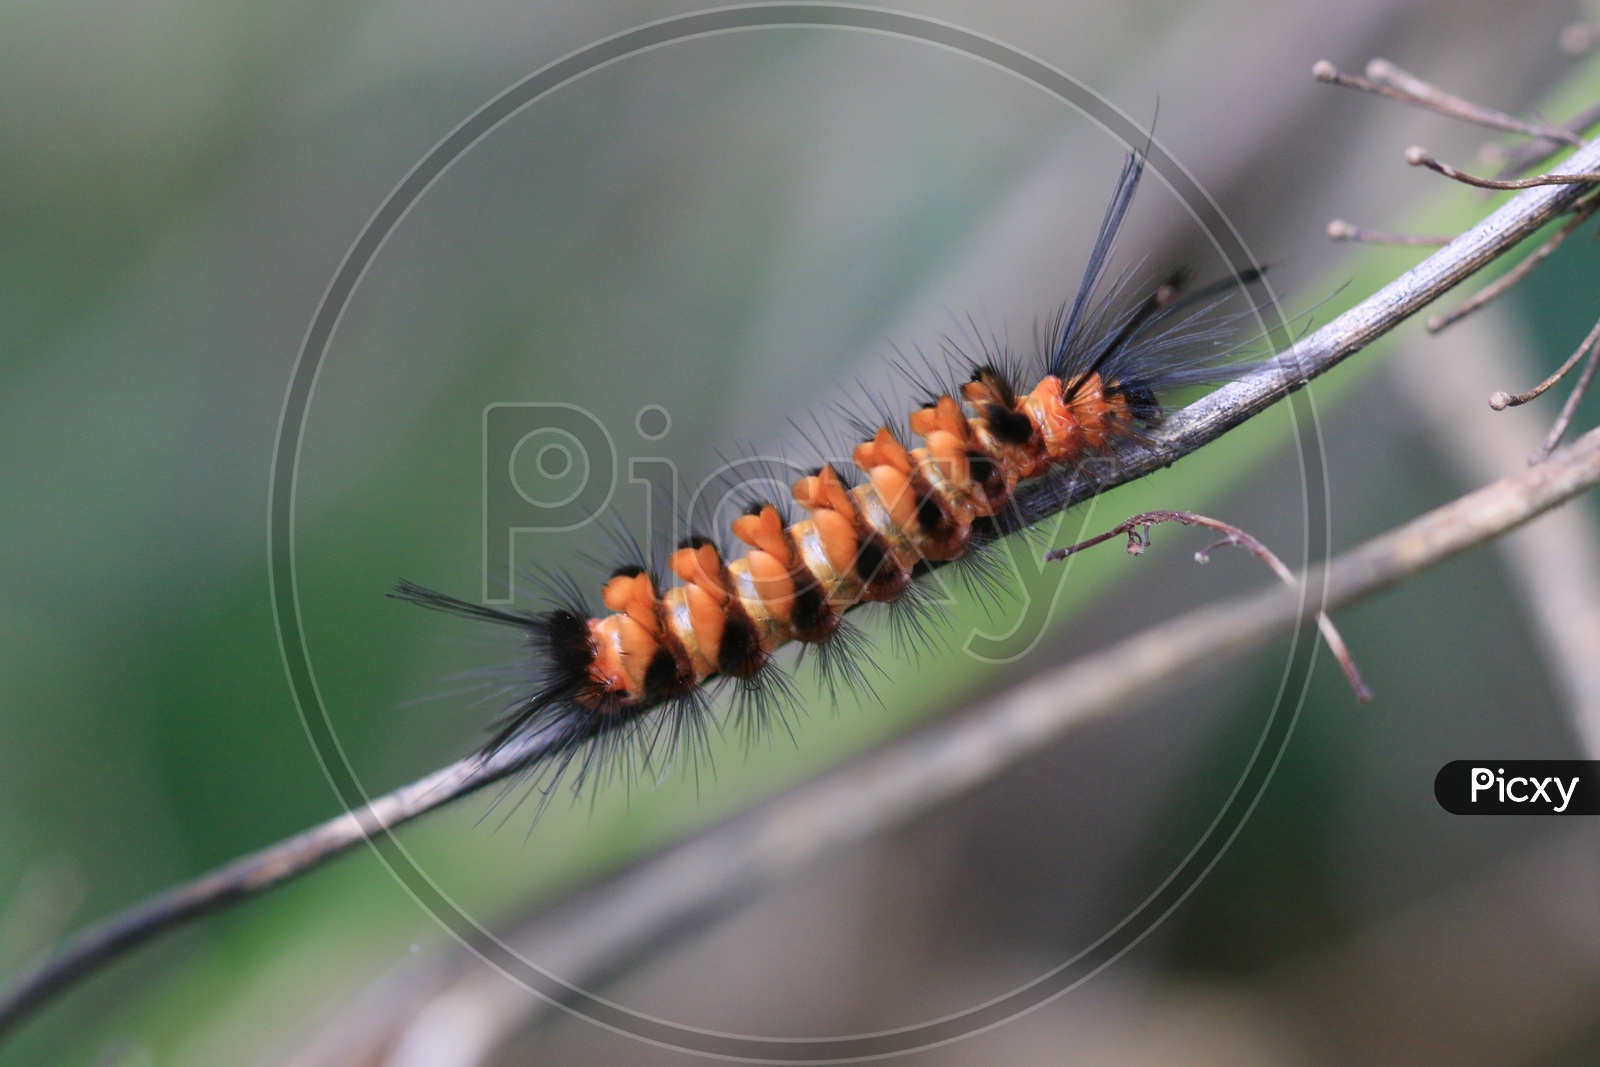 A Caterpillar on a Tree Closeup Shot